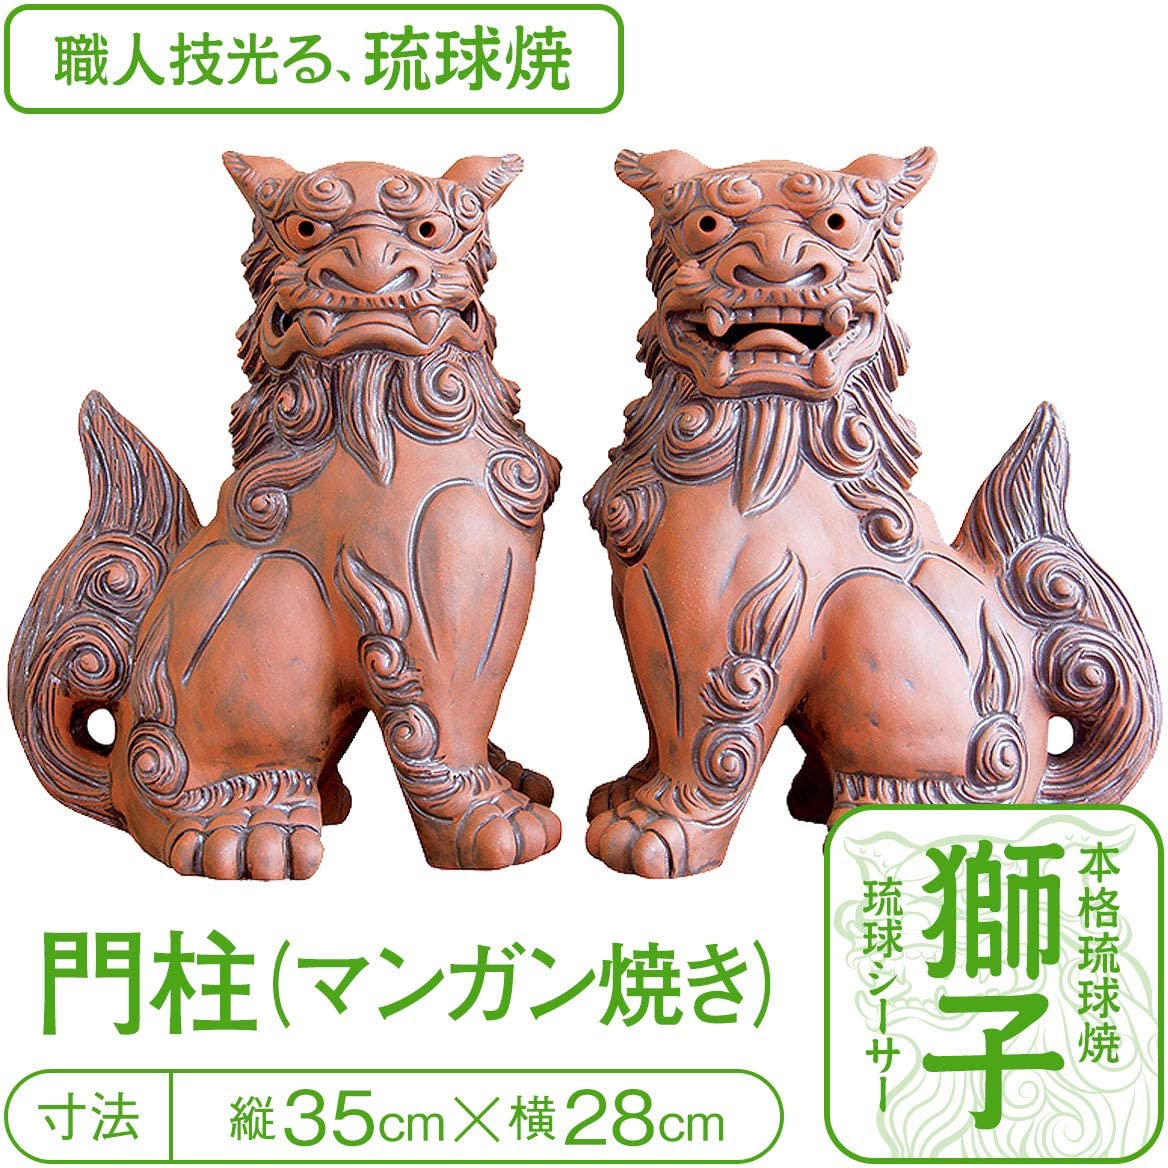 Okinawa gatepost Shisa manganese pottery height 14 inches from Japan 10268 画像2